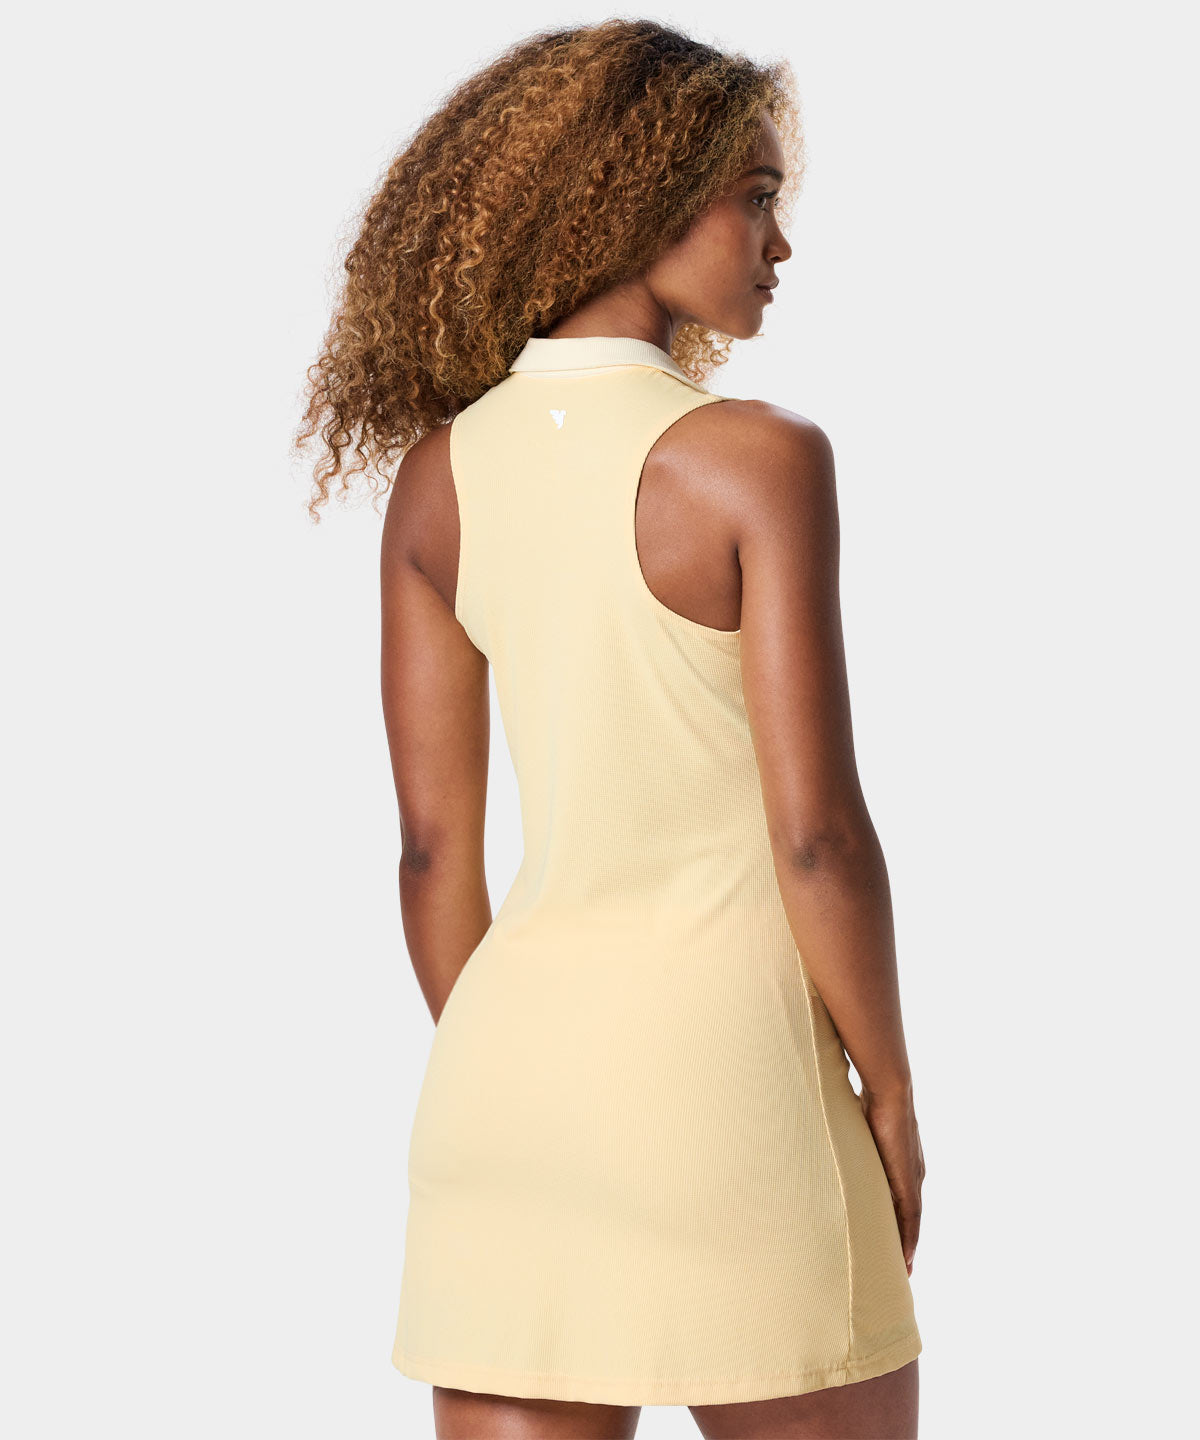 Lana Yellow Sleeveless Dress